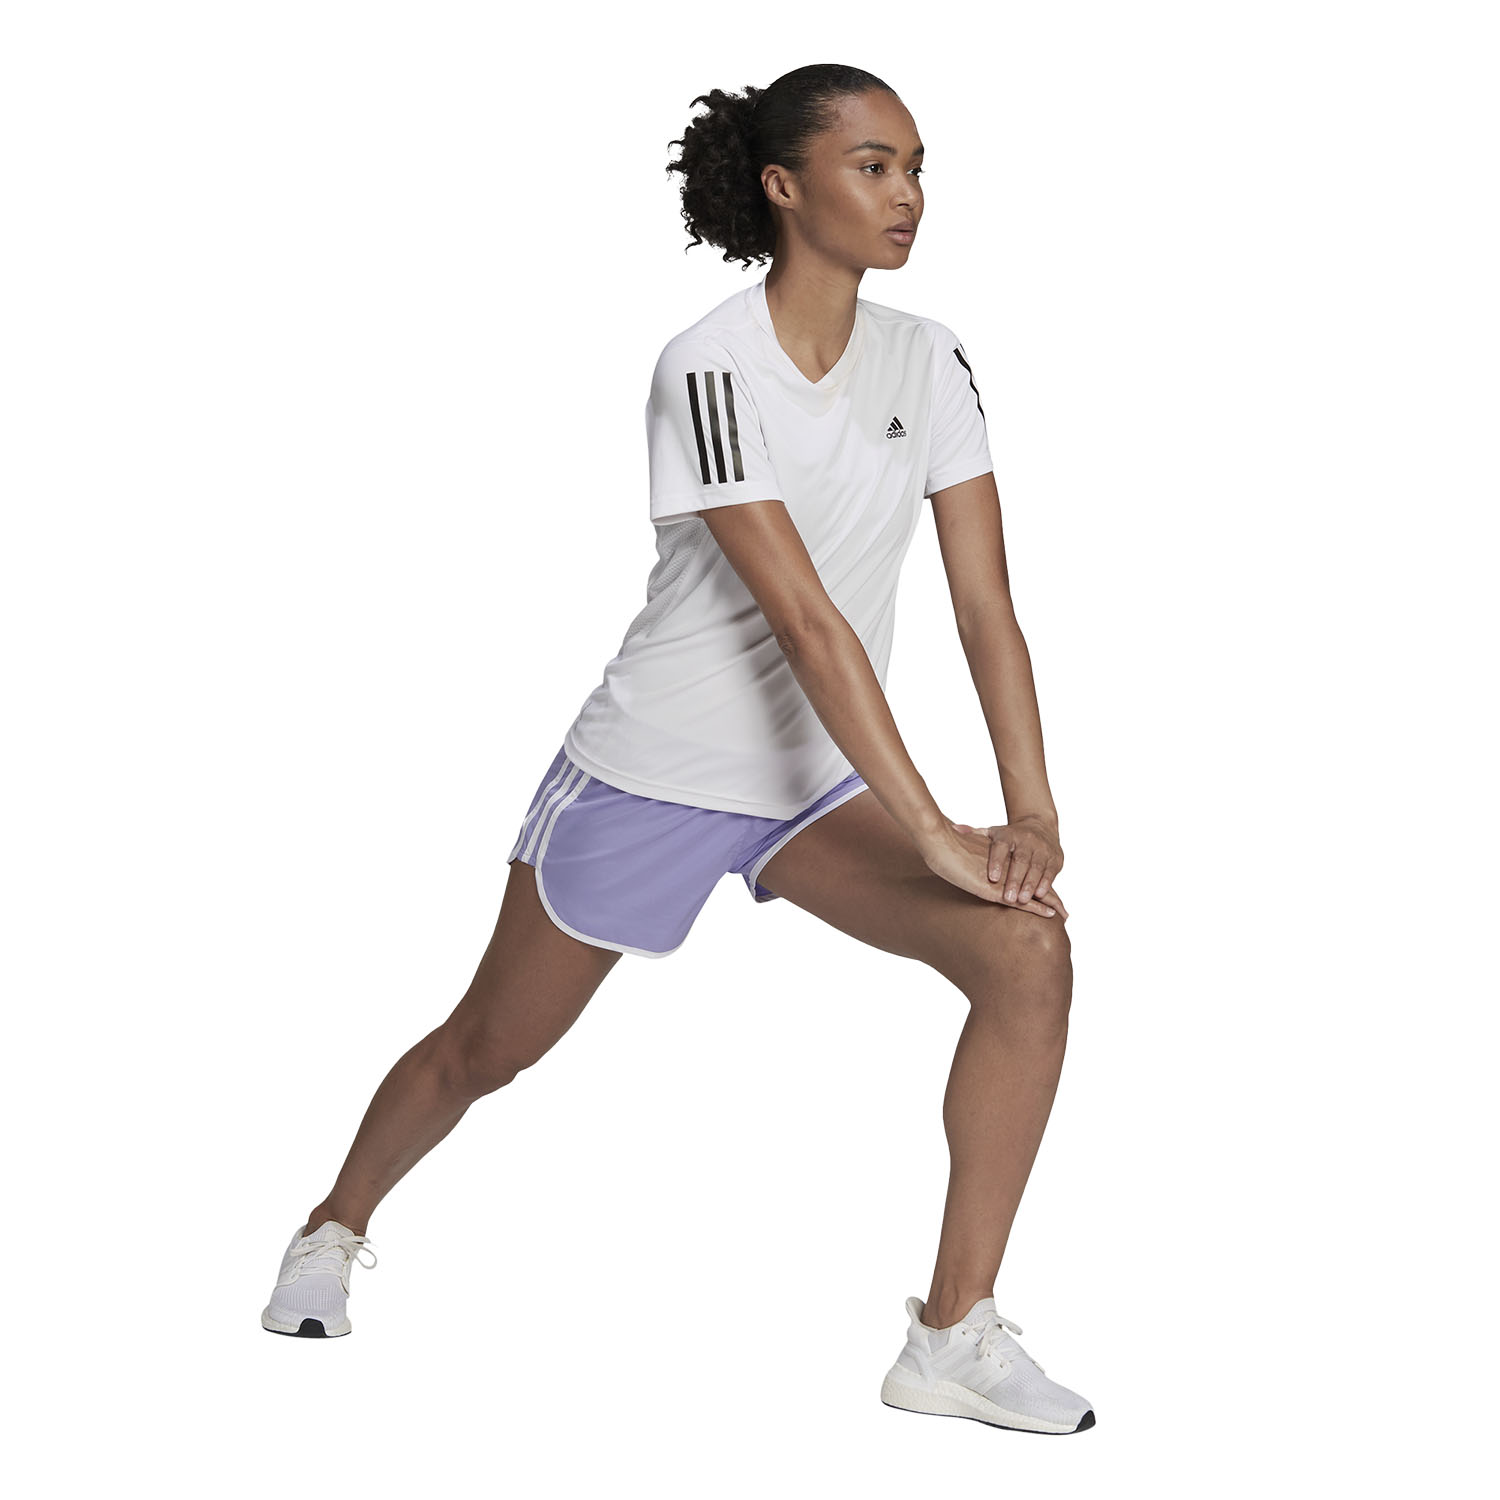 adidas Marathon 20 3in Shorts - Light Purple/White